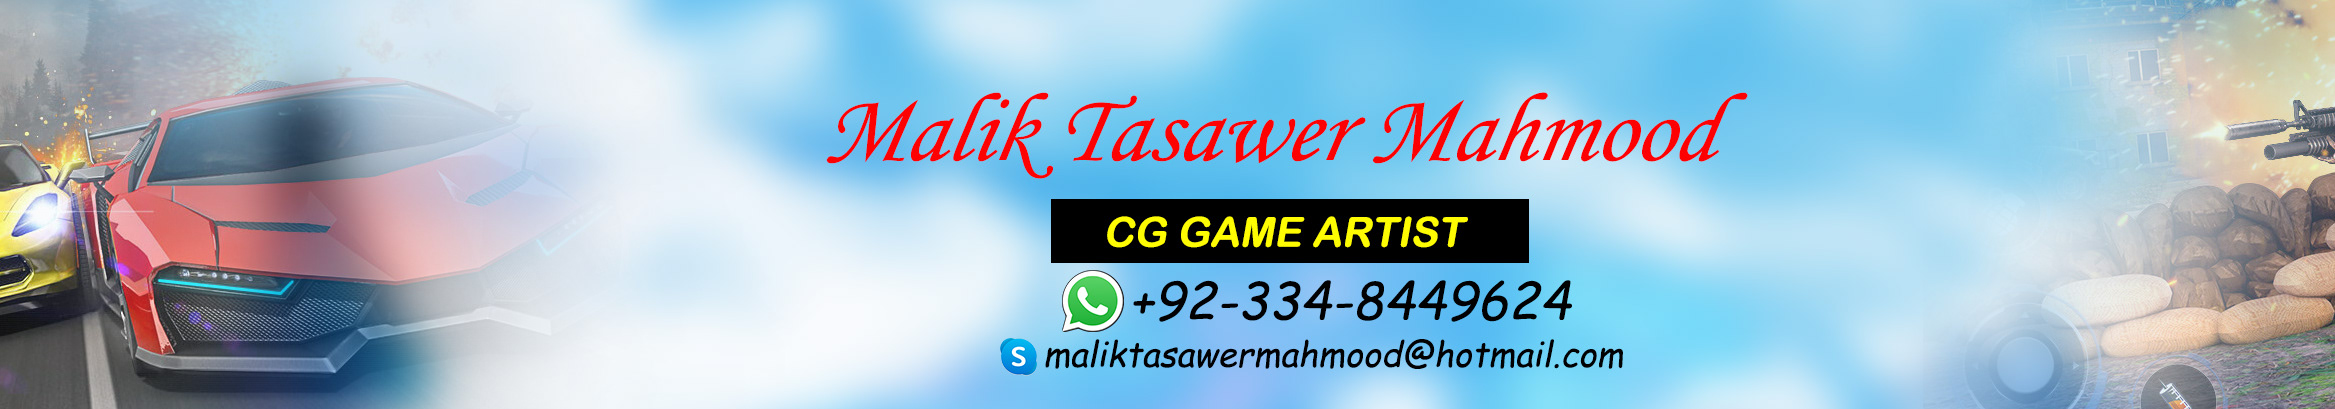 Malik Tasawer profil başlığı